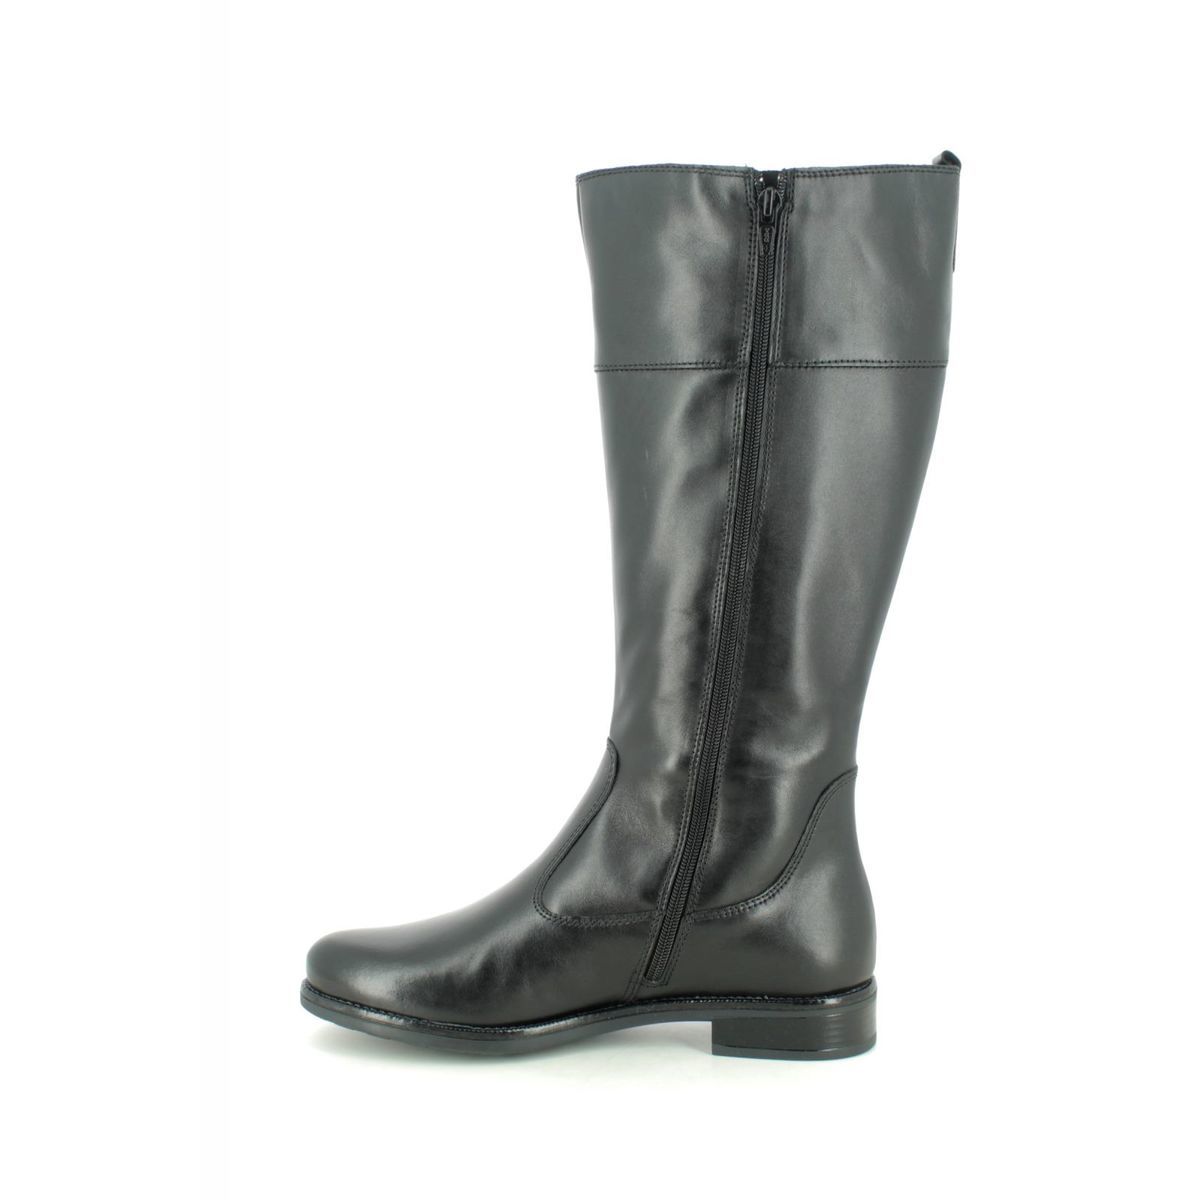 Tamaris Cari Wide Calf 25582-25-001 Black leather knee-high boots